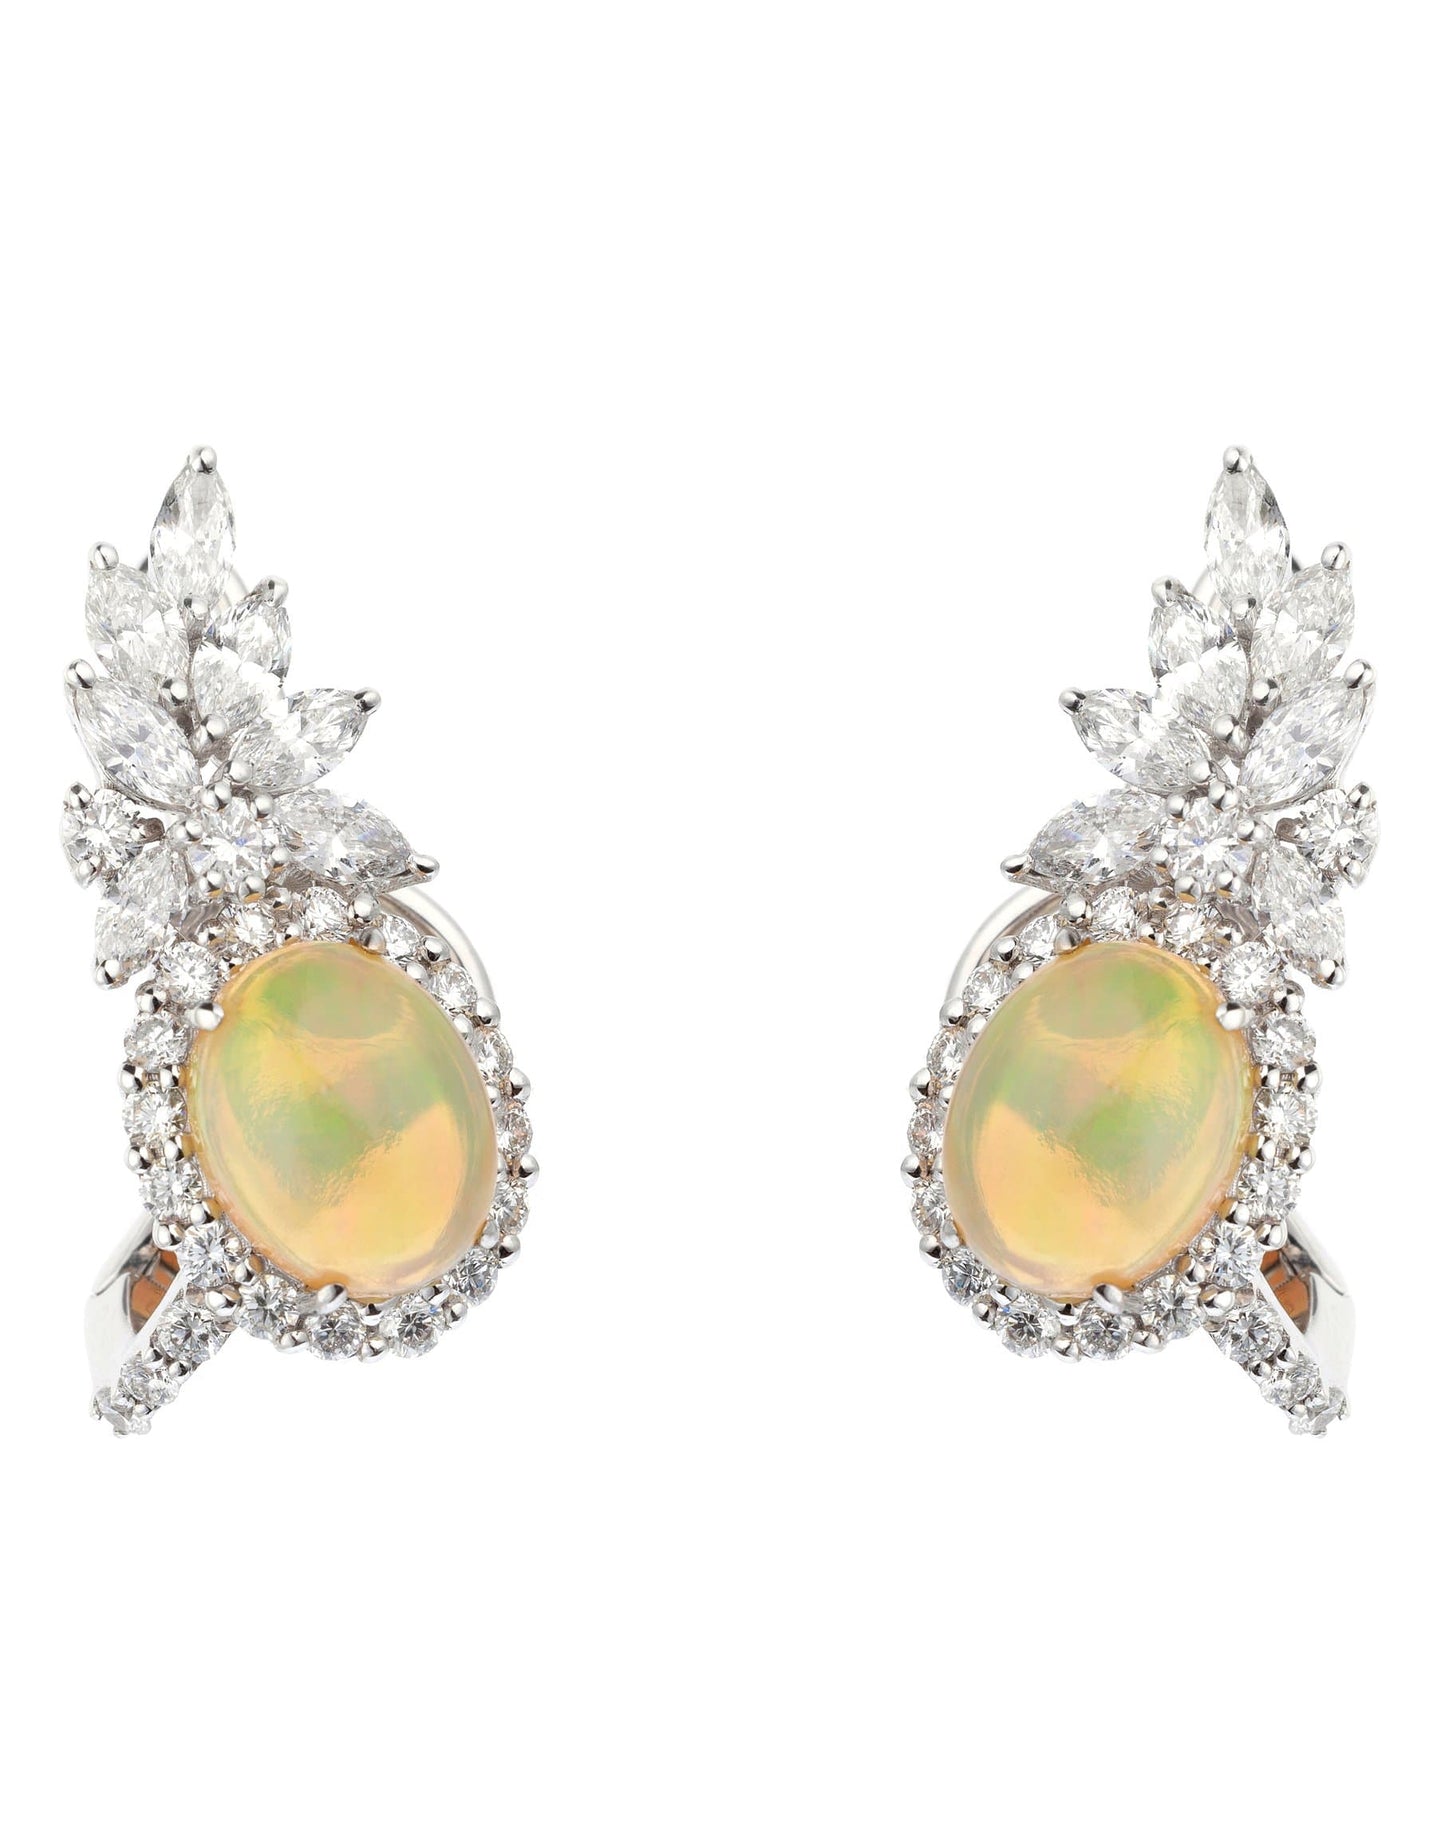 YEPREM JEWELLERY-Opal and Diamond Earrings-WHITE GOLD